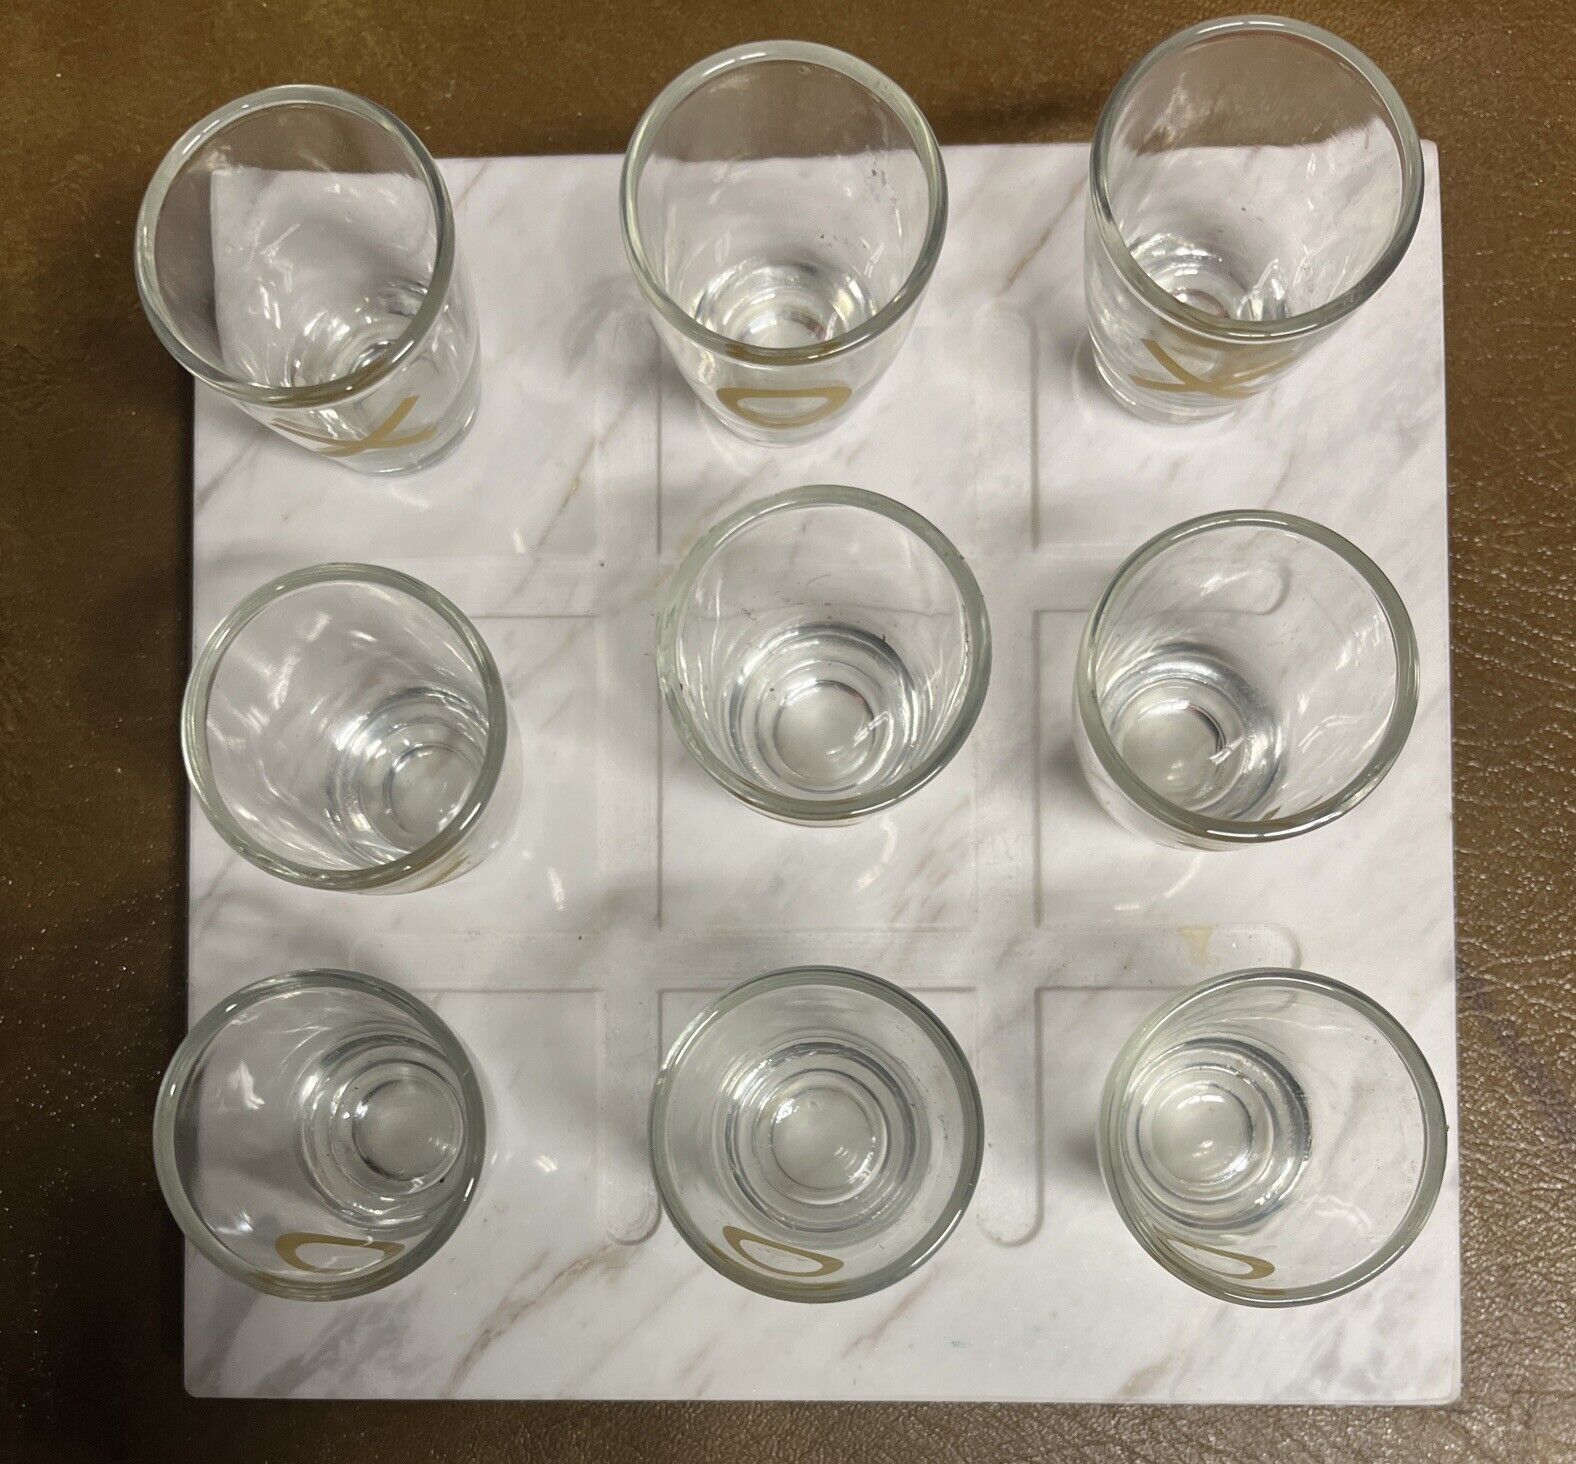 GAME NIGHT Tic Tac Toe Shot glass Marbletray  (SHOTS SHOTS SHOTS) 9 Glasses